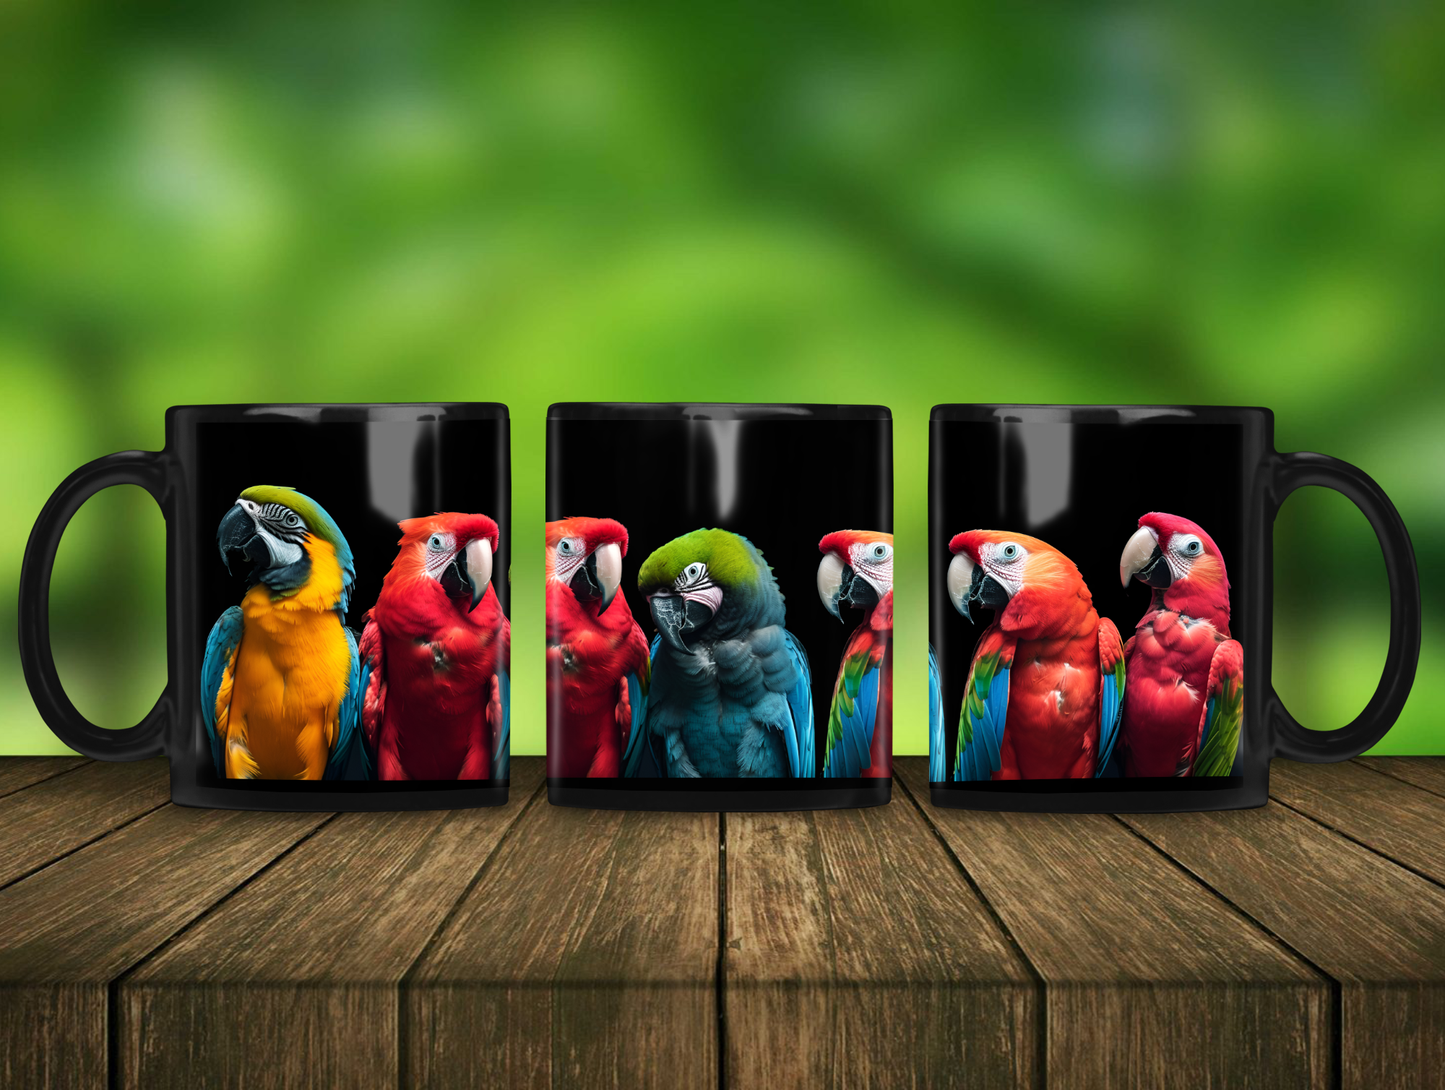 Bright Parrots Mug